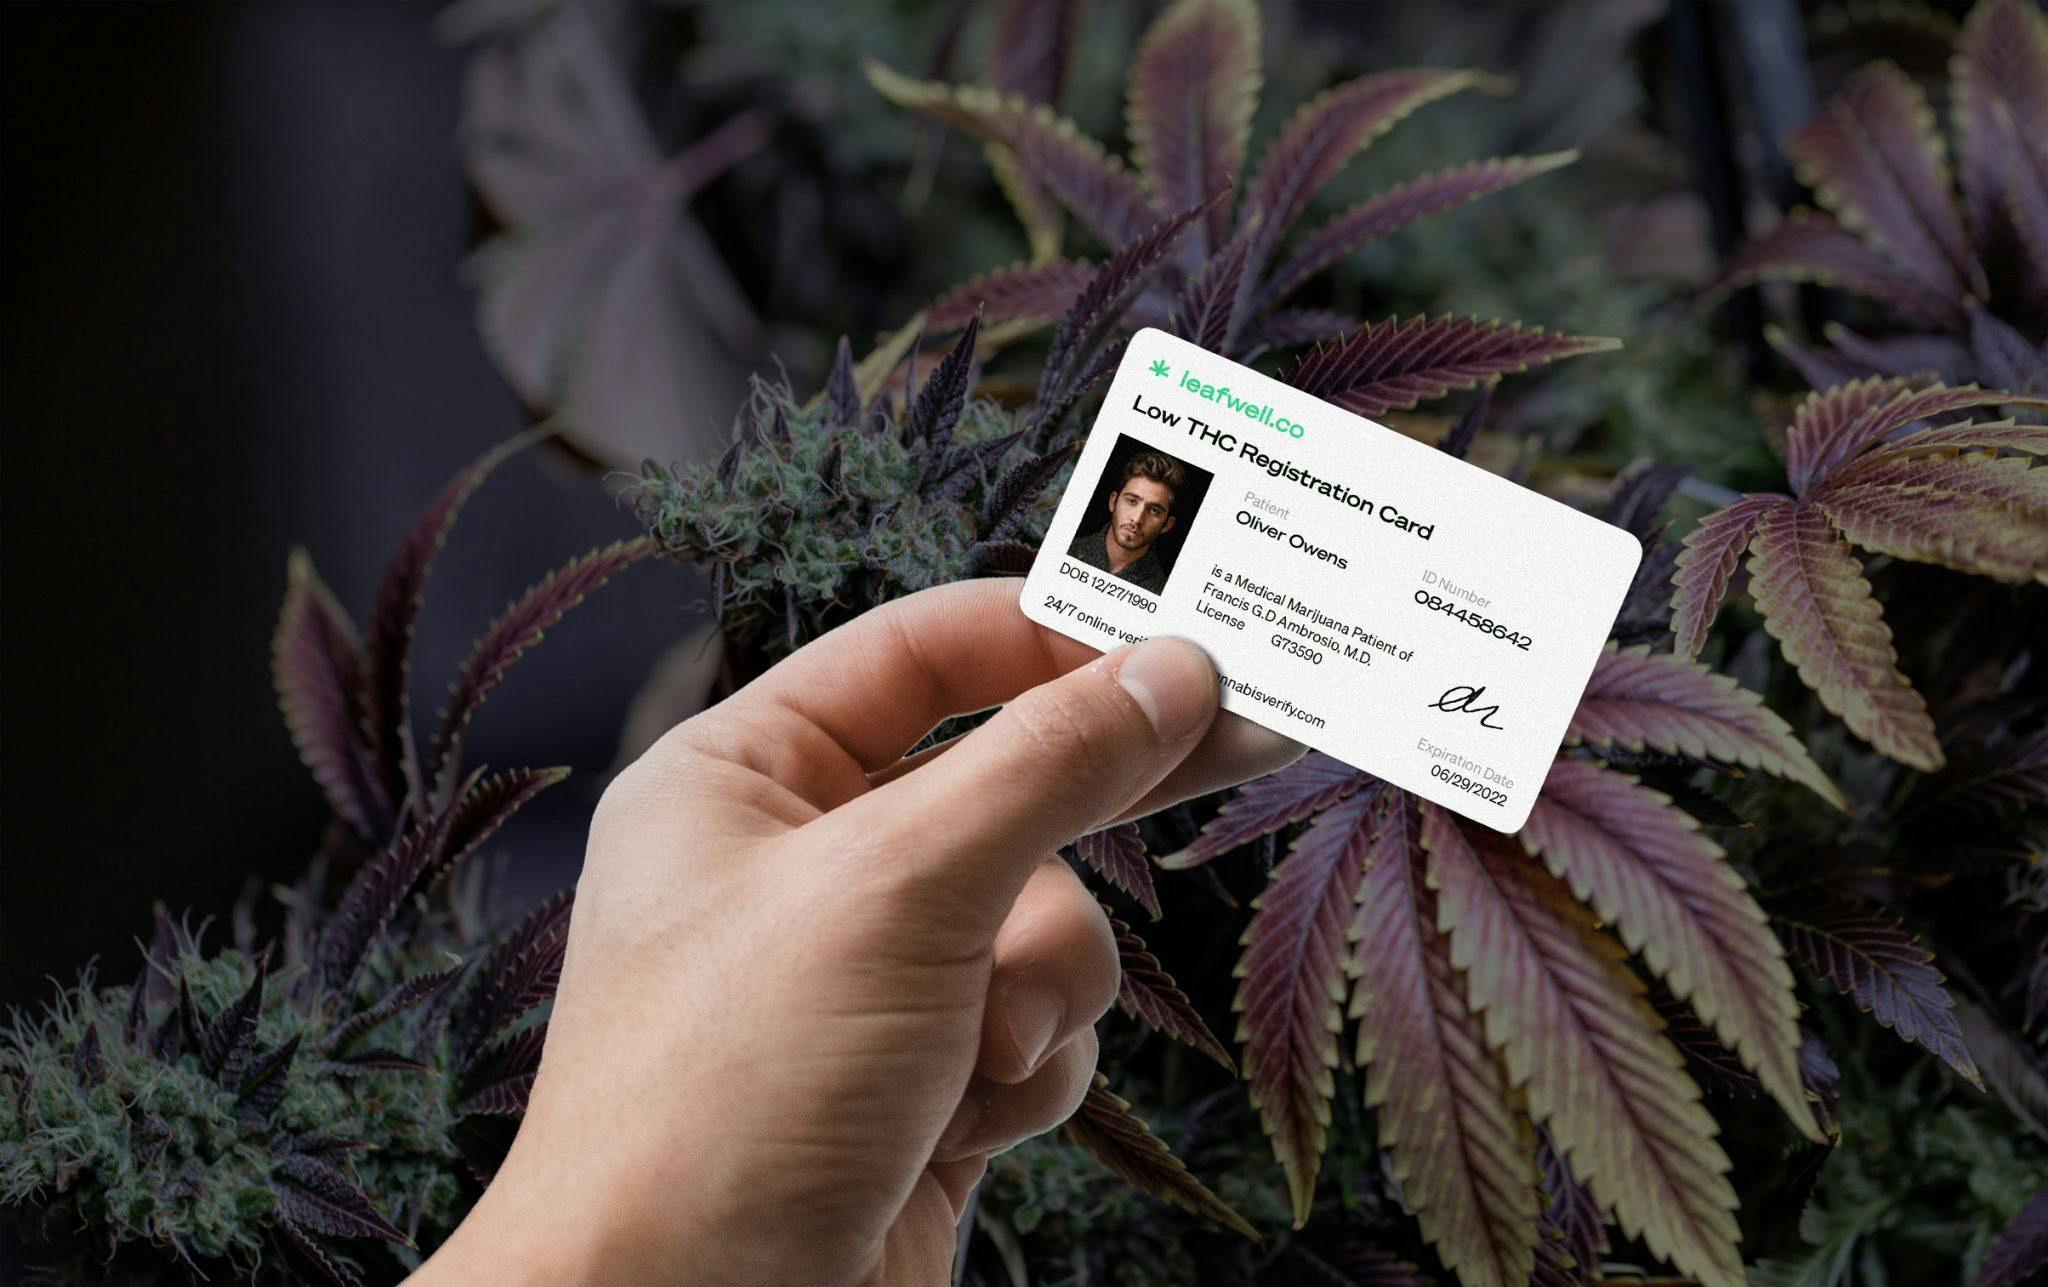 low thc cannabis card